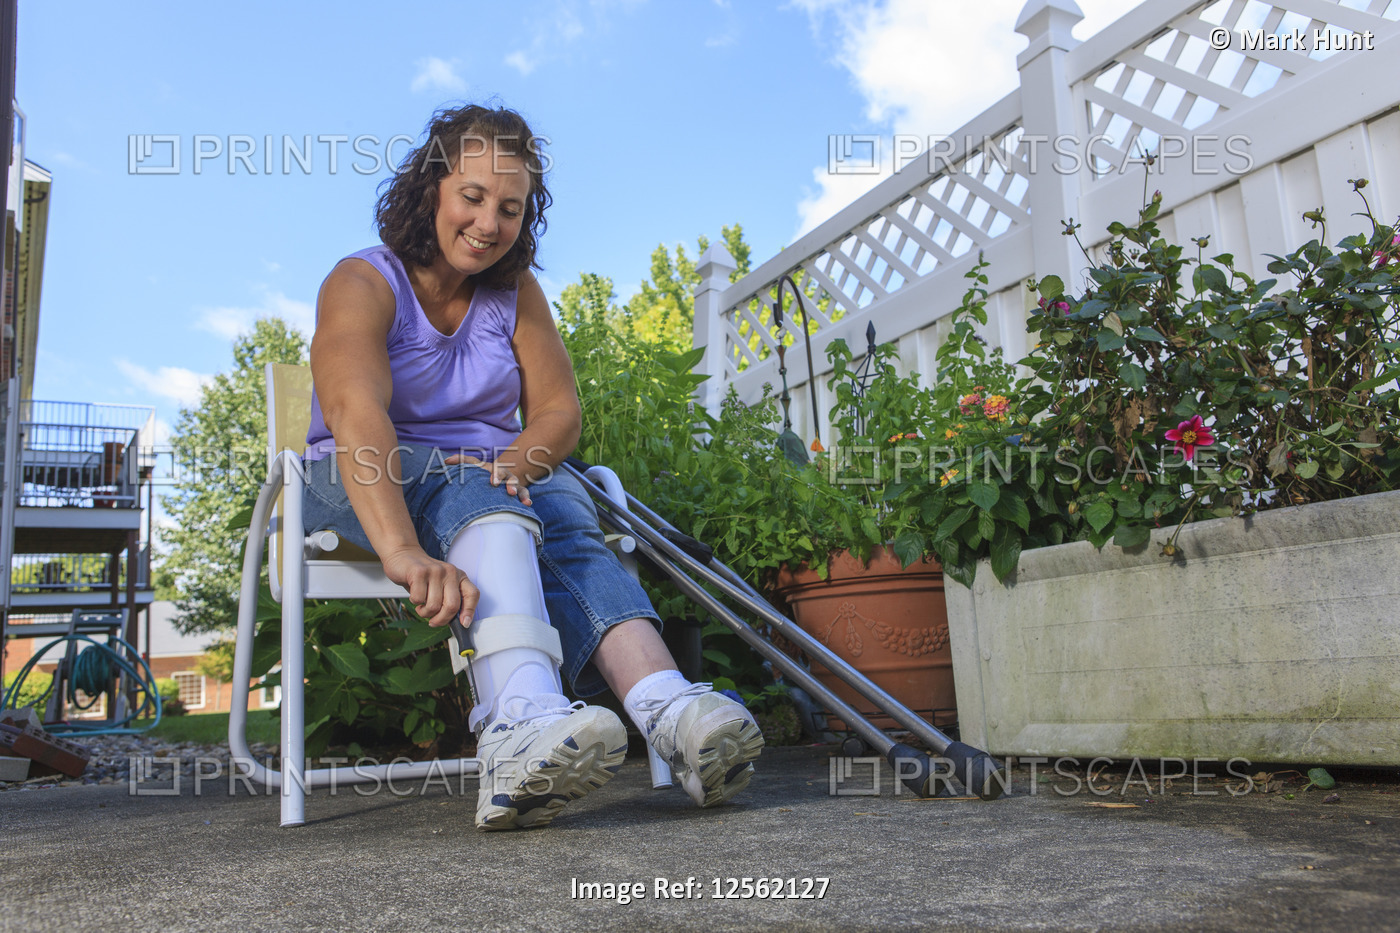 Woman with Spina Bifida adjusting leg brace so she can walk